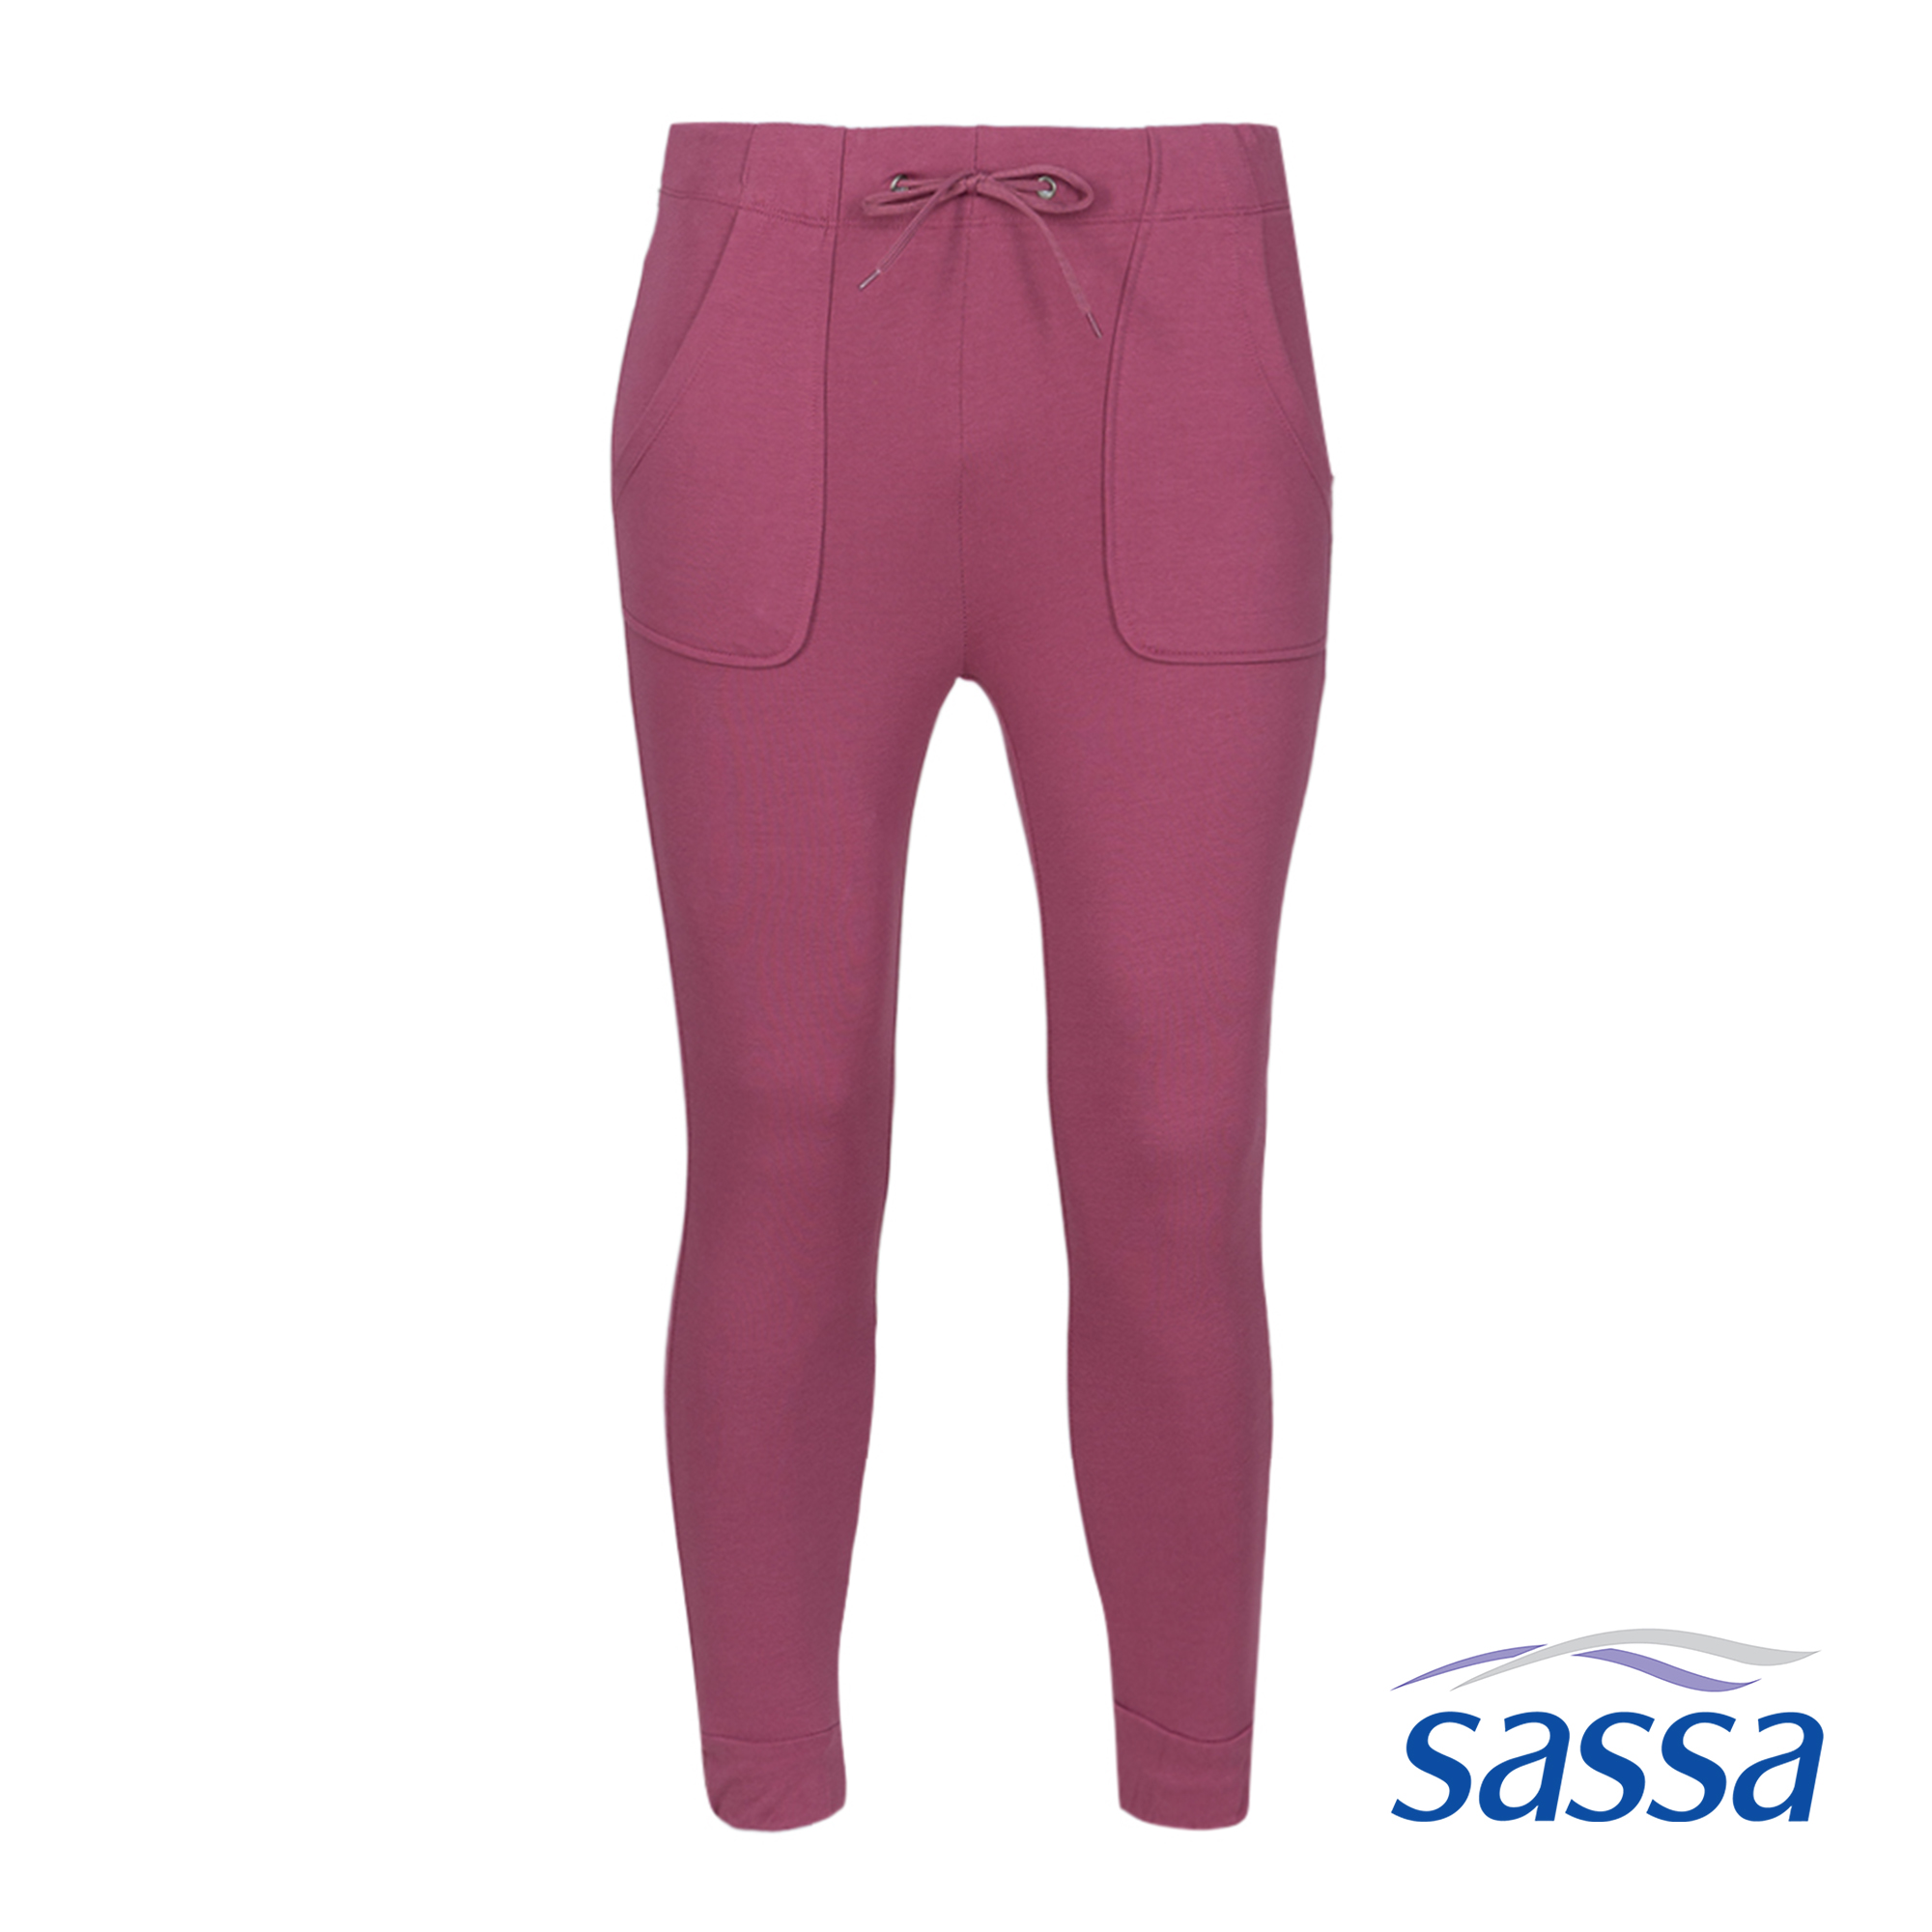 Buy Sassa Relaxing Bliss Jogger Pants with Drawstring Women